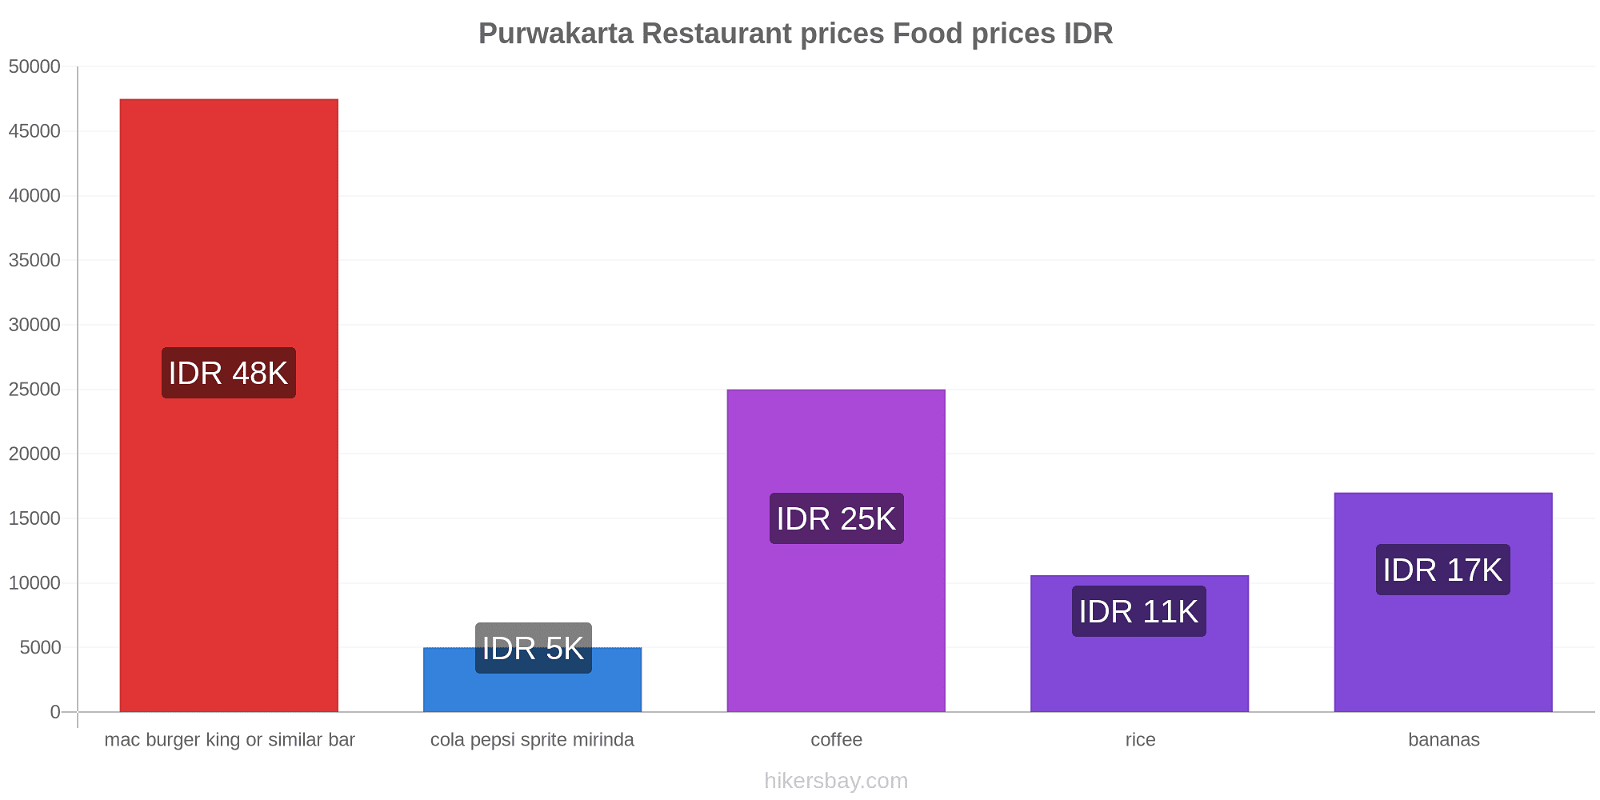 Purwakarta price changes hikersbay.com